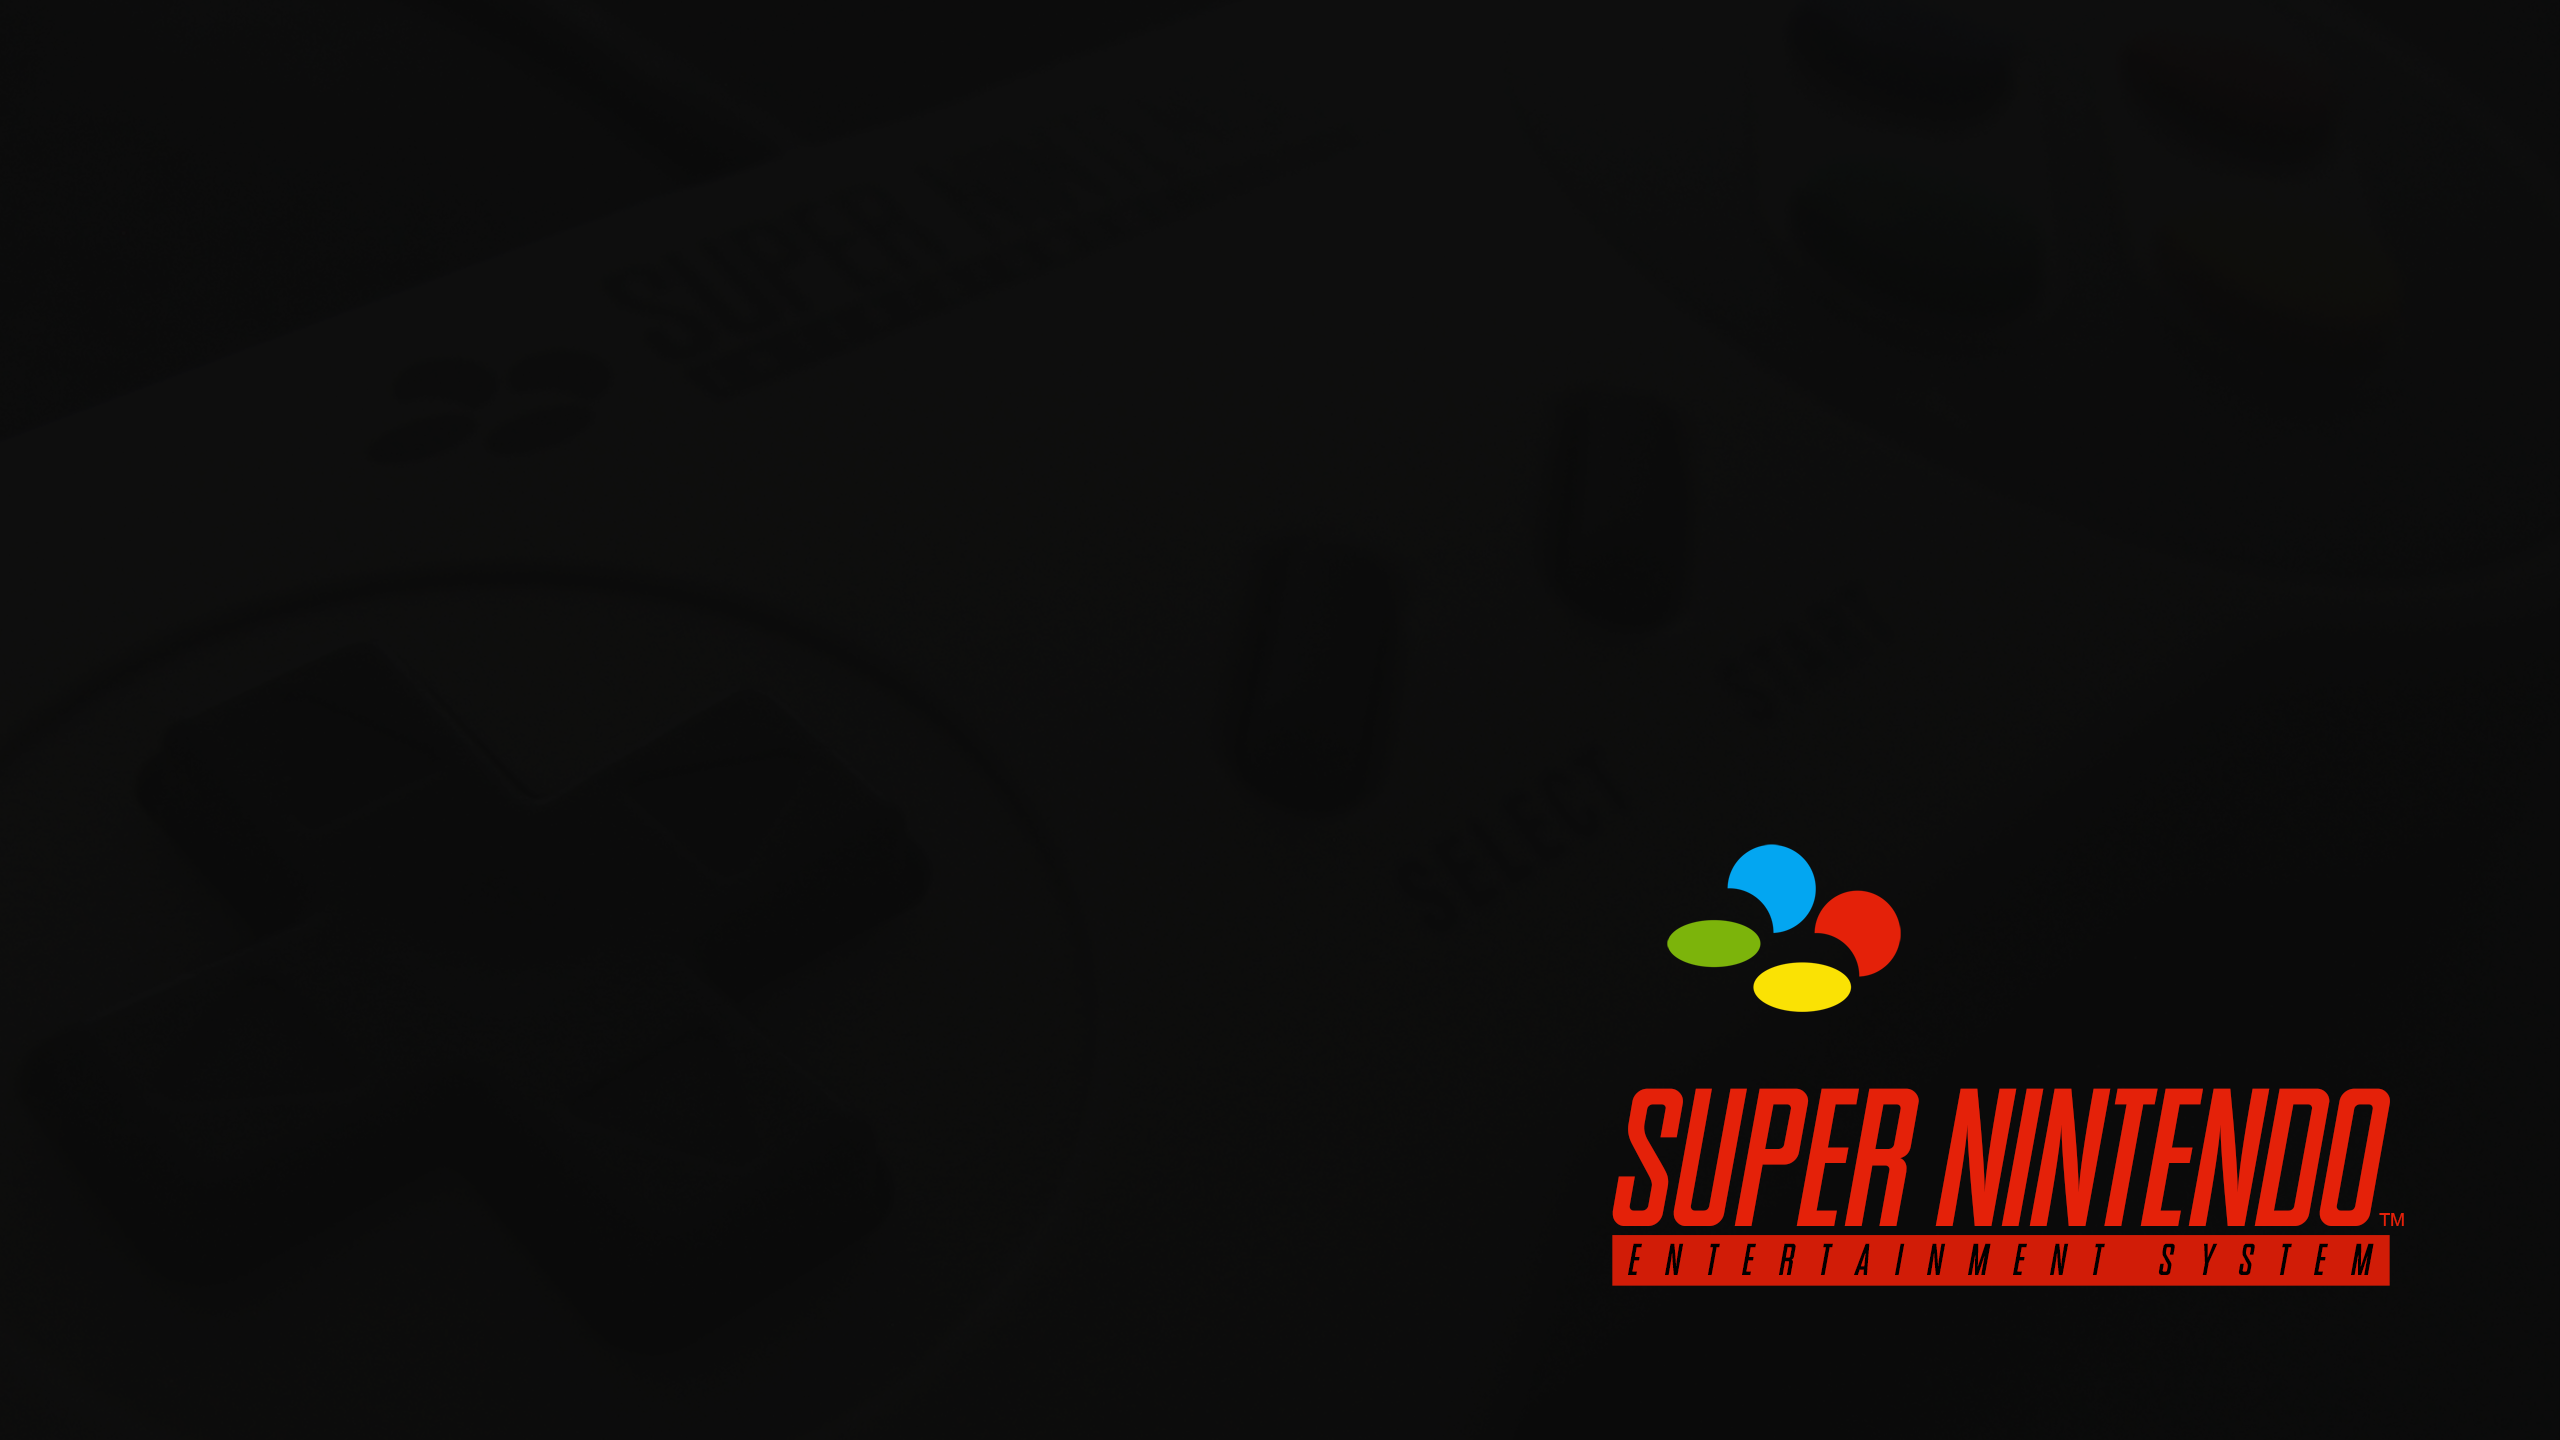 General 2560x1440 SNES logo consoles Nintendo video games